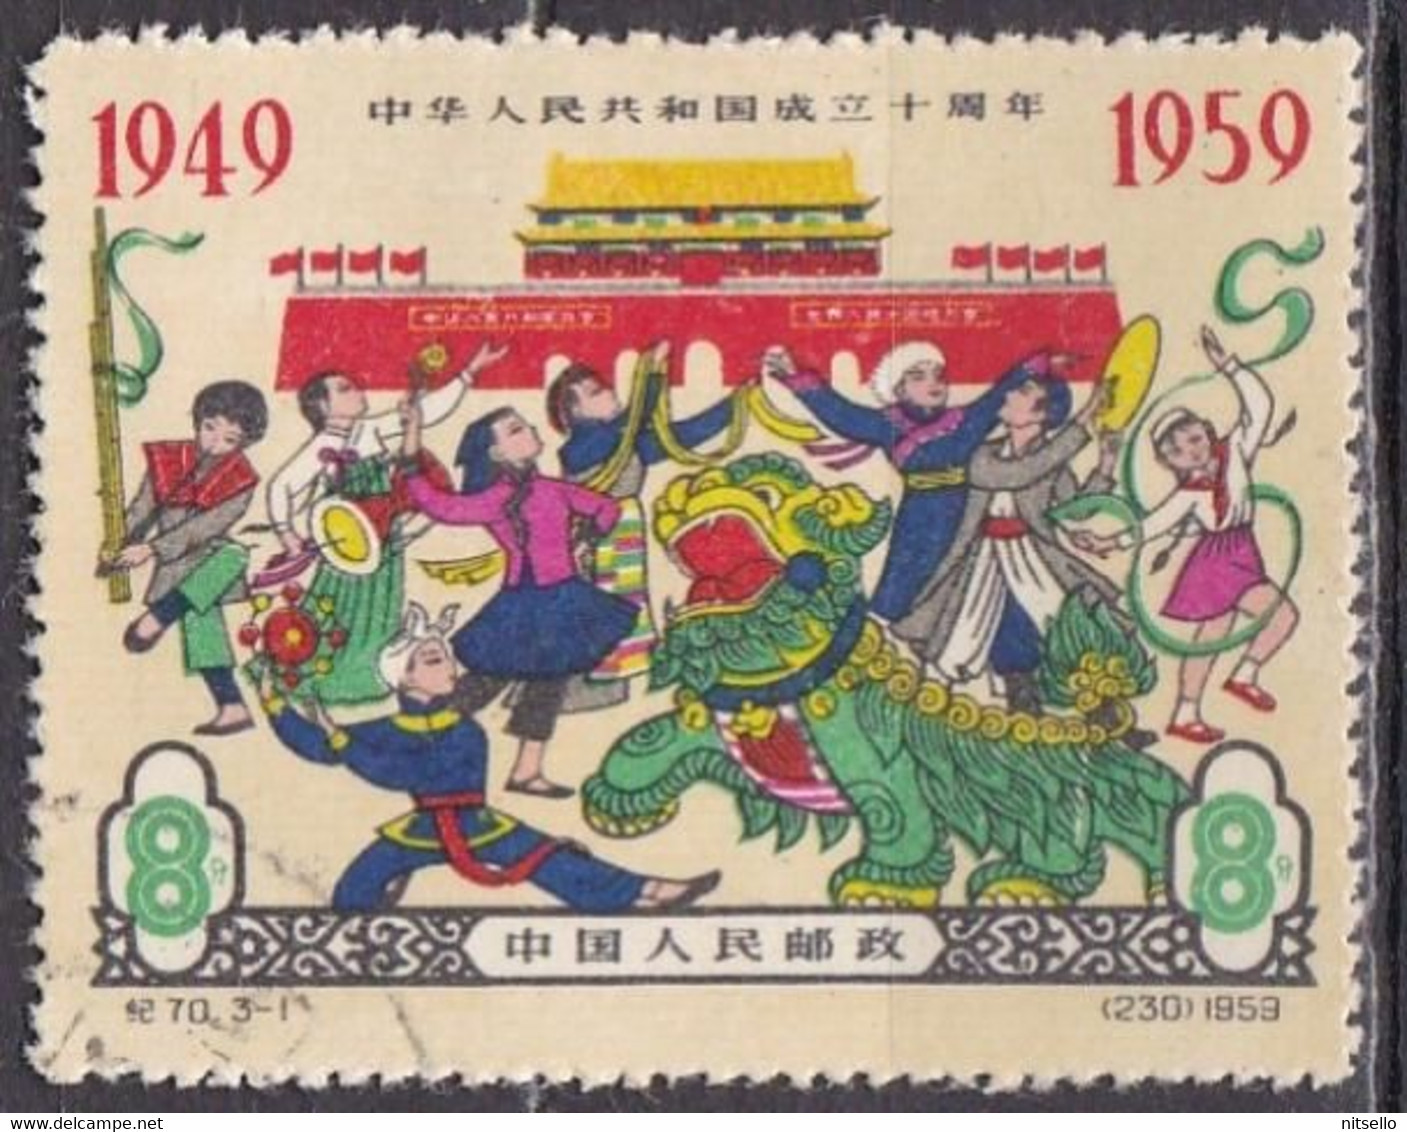 LOTE 1800  ///  (C050) CHINA  1959   YVERT Nº: 1239       ¡¡¡ OFERTA - LIQUIDATION - JE LIQUIDE !!! - Used Stamps